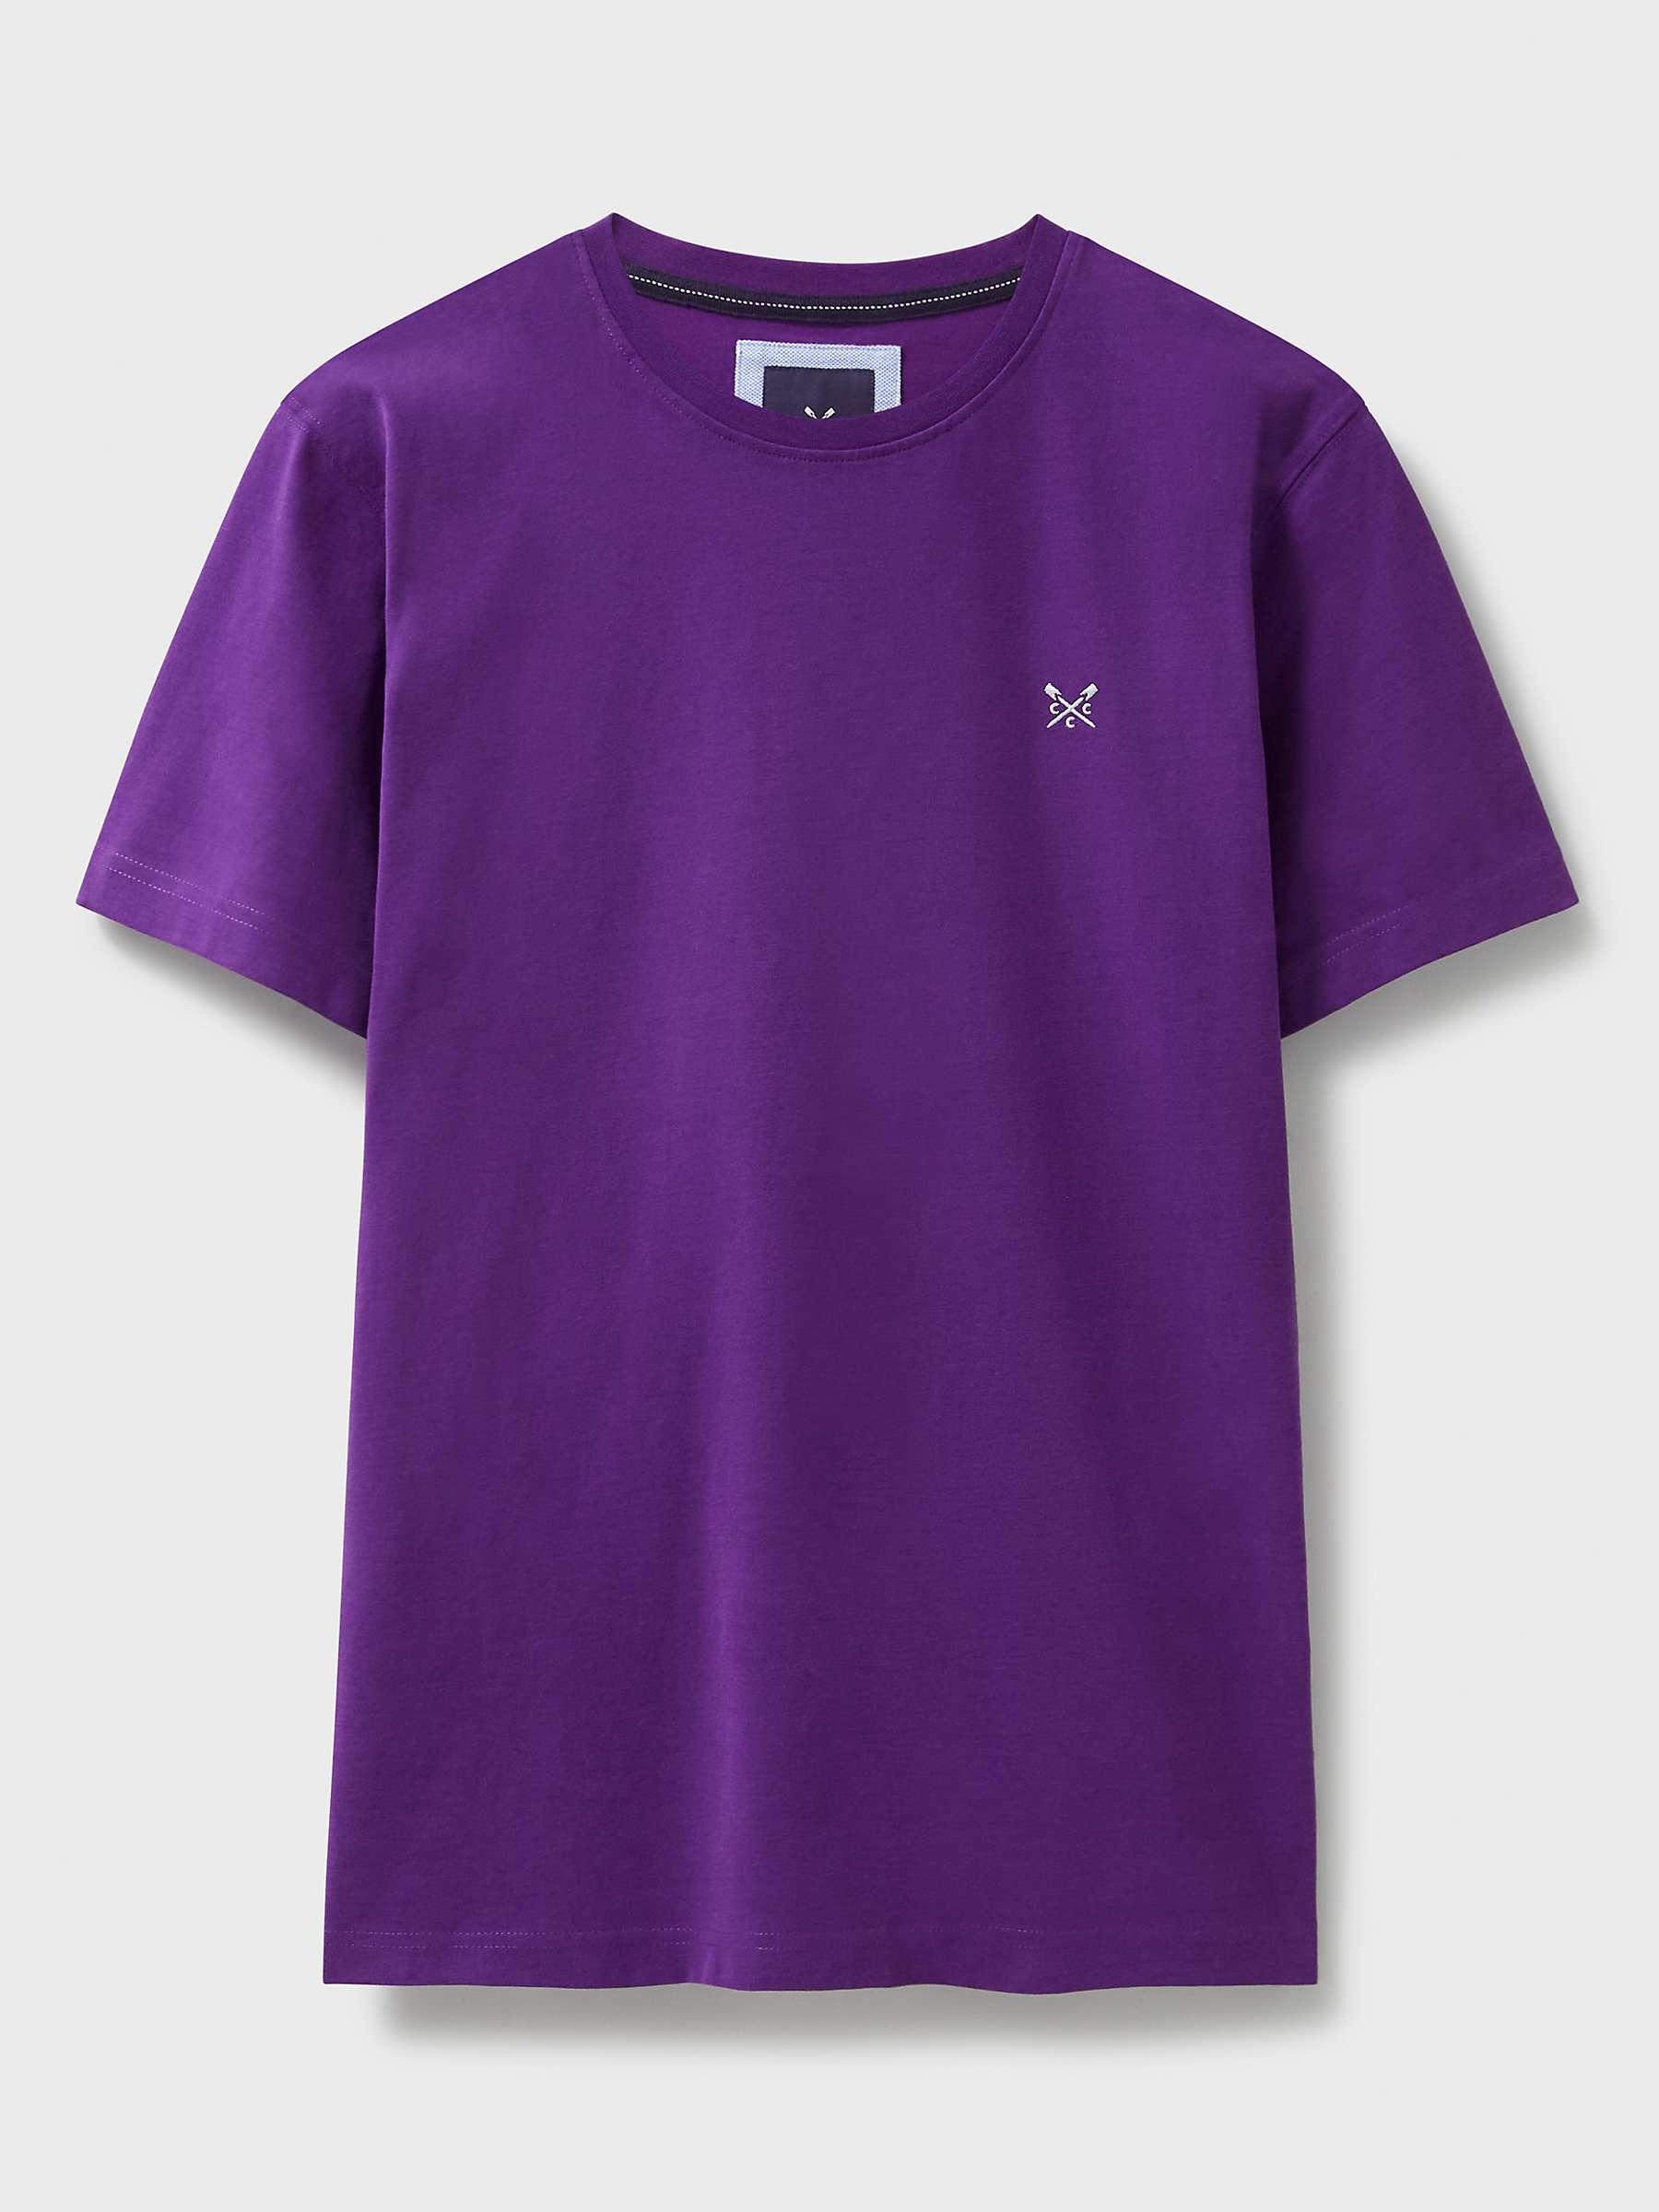 Buy Crew Clothing Crew Neck Cotton T-Shirt Online at johnlewis.com